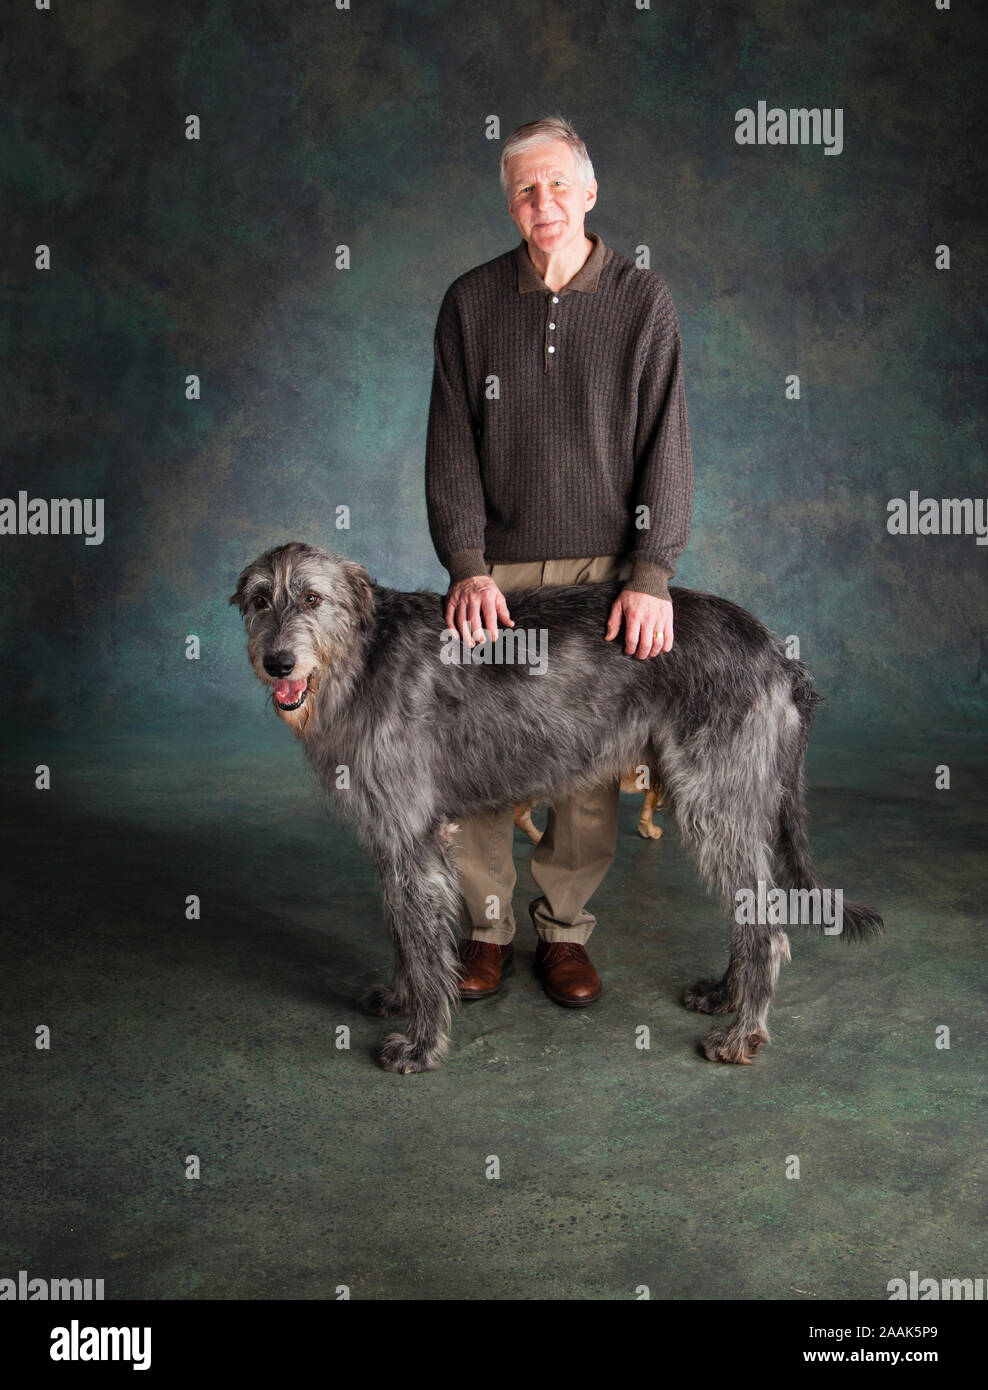 Studio portrait of senior man with Wolf Hound dog Stock Photo